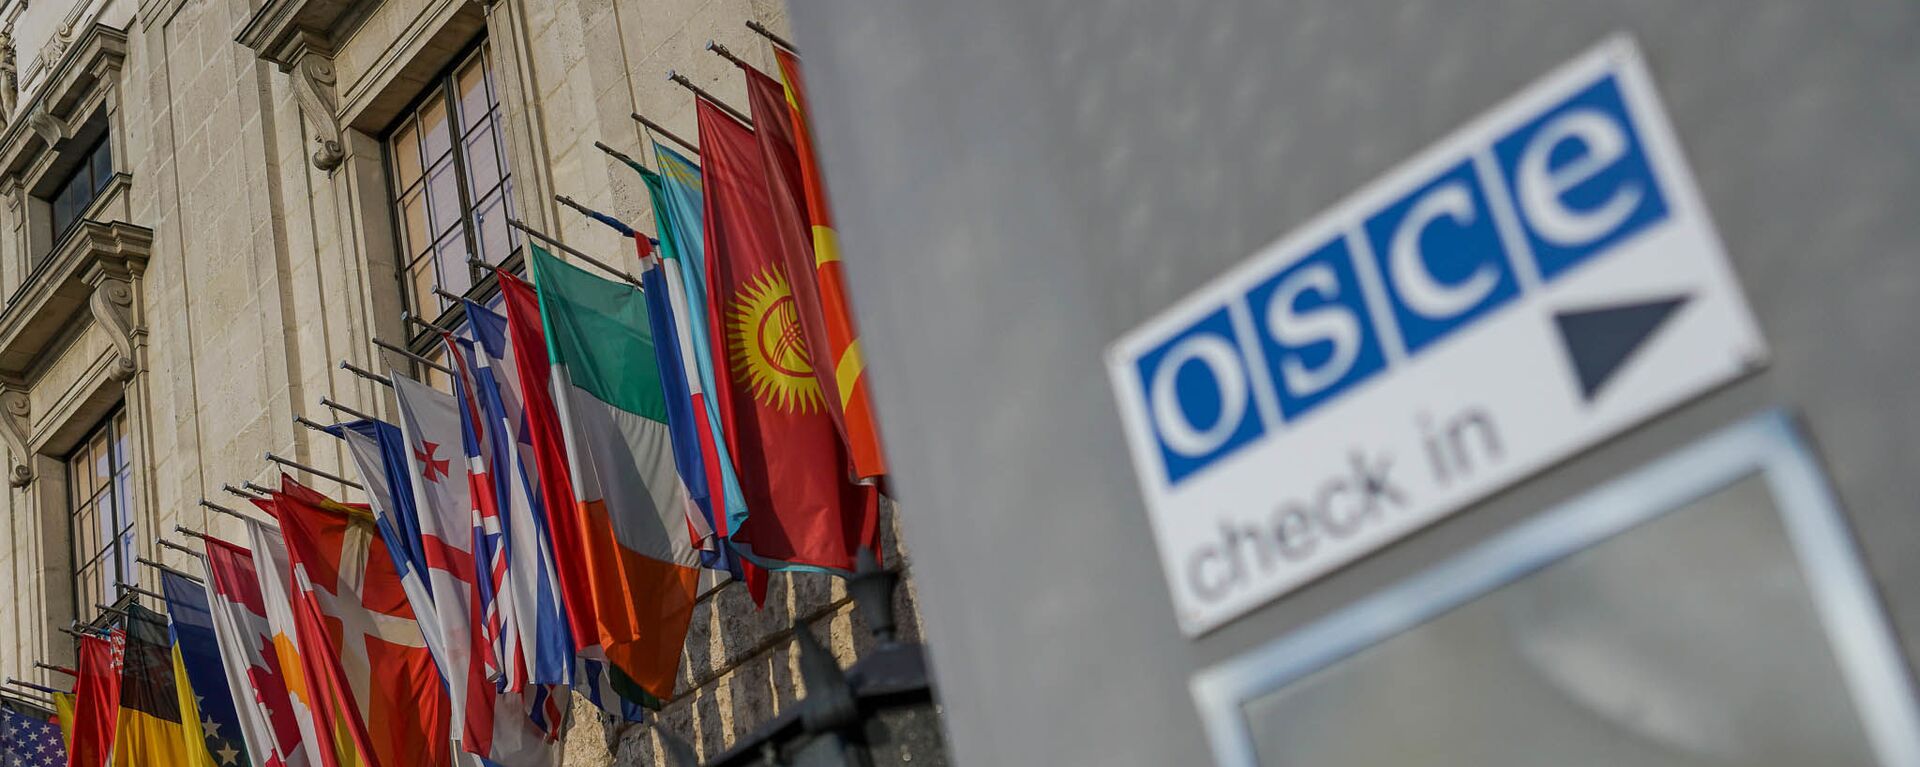 Флаги у штаб-квартиры ОБСЕ в Вене - Sputnik Латвия, 1920, 01.02.2021